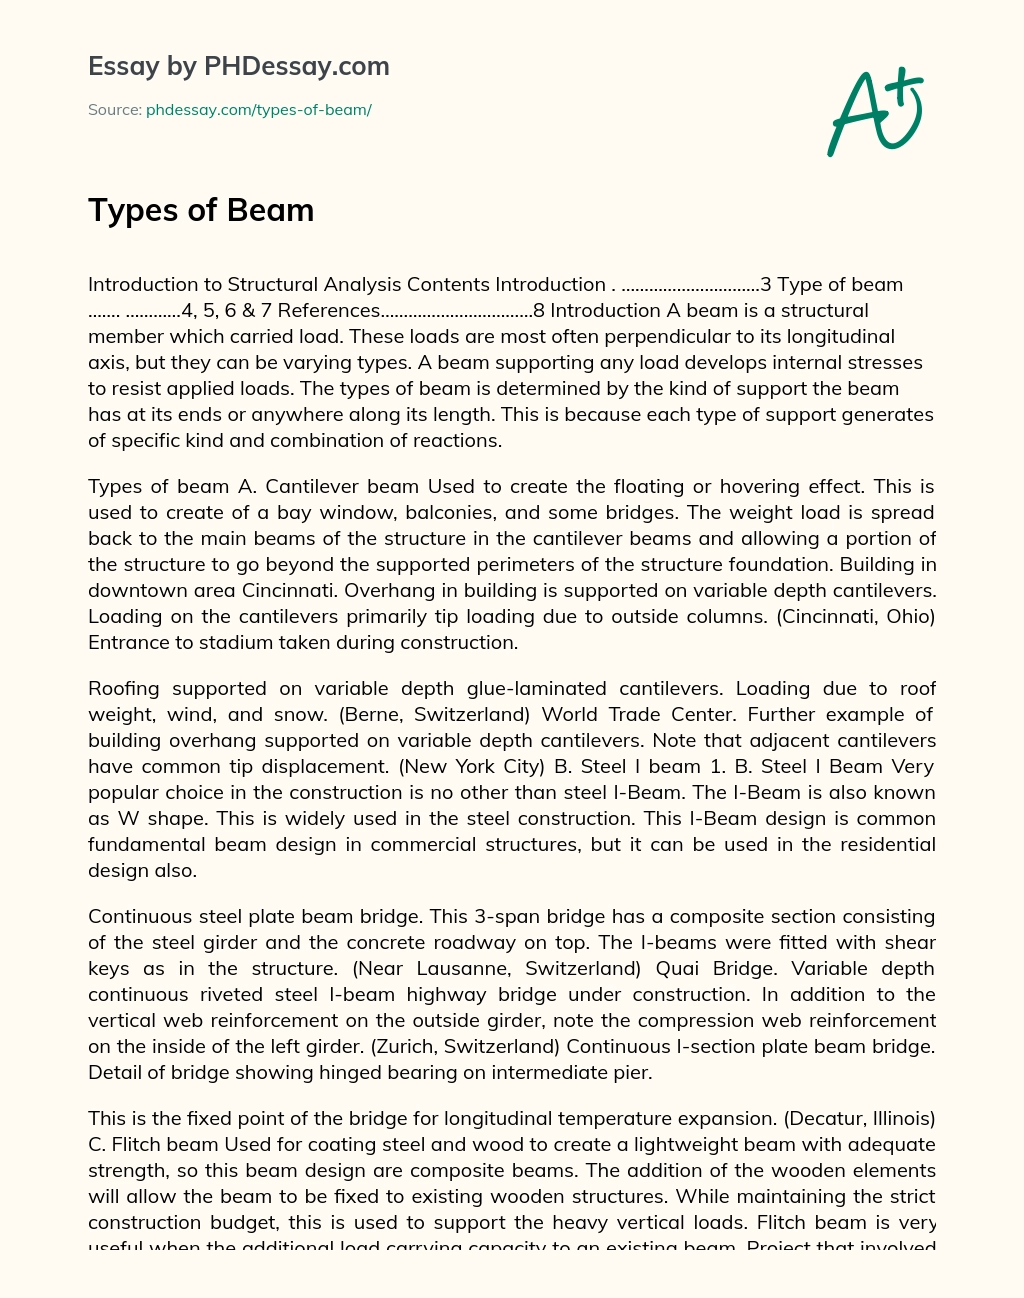 Types of Beam essay